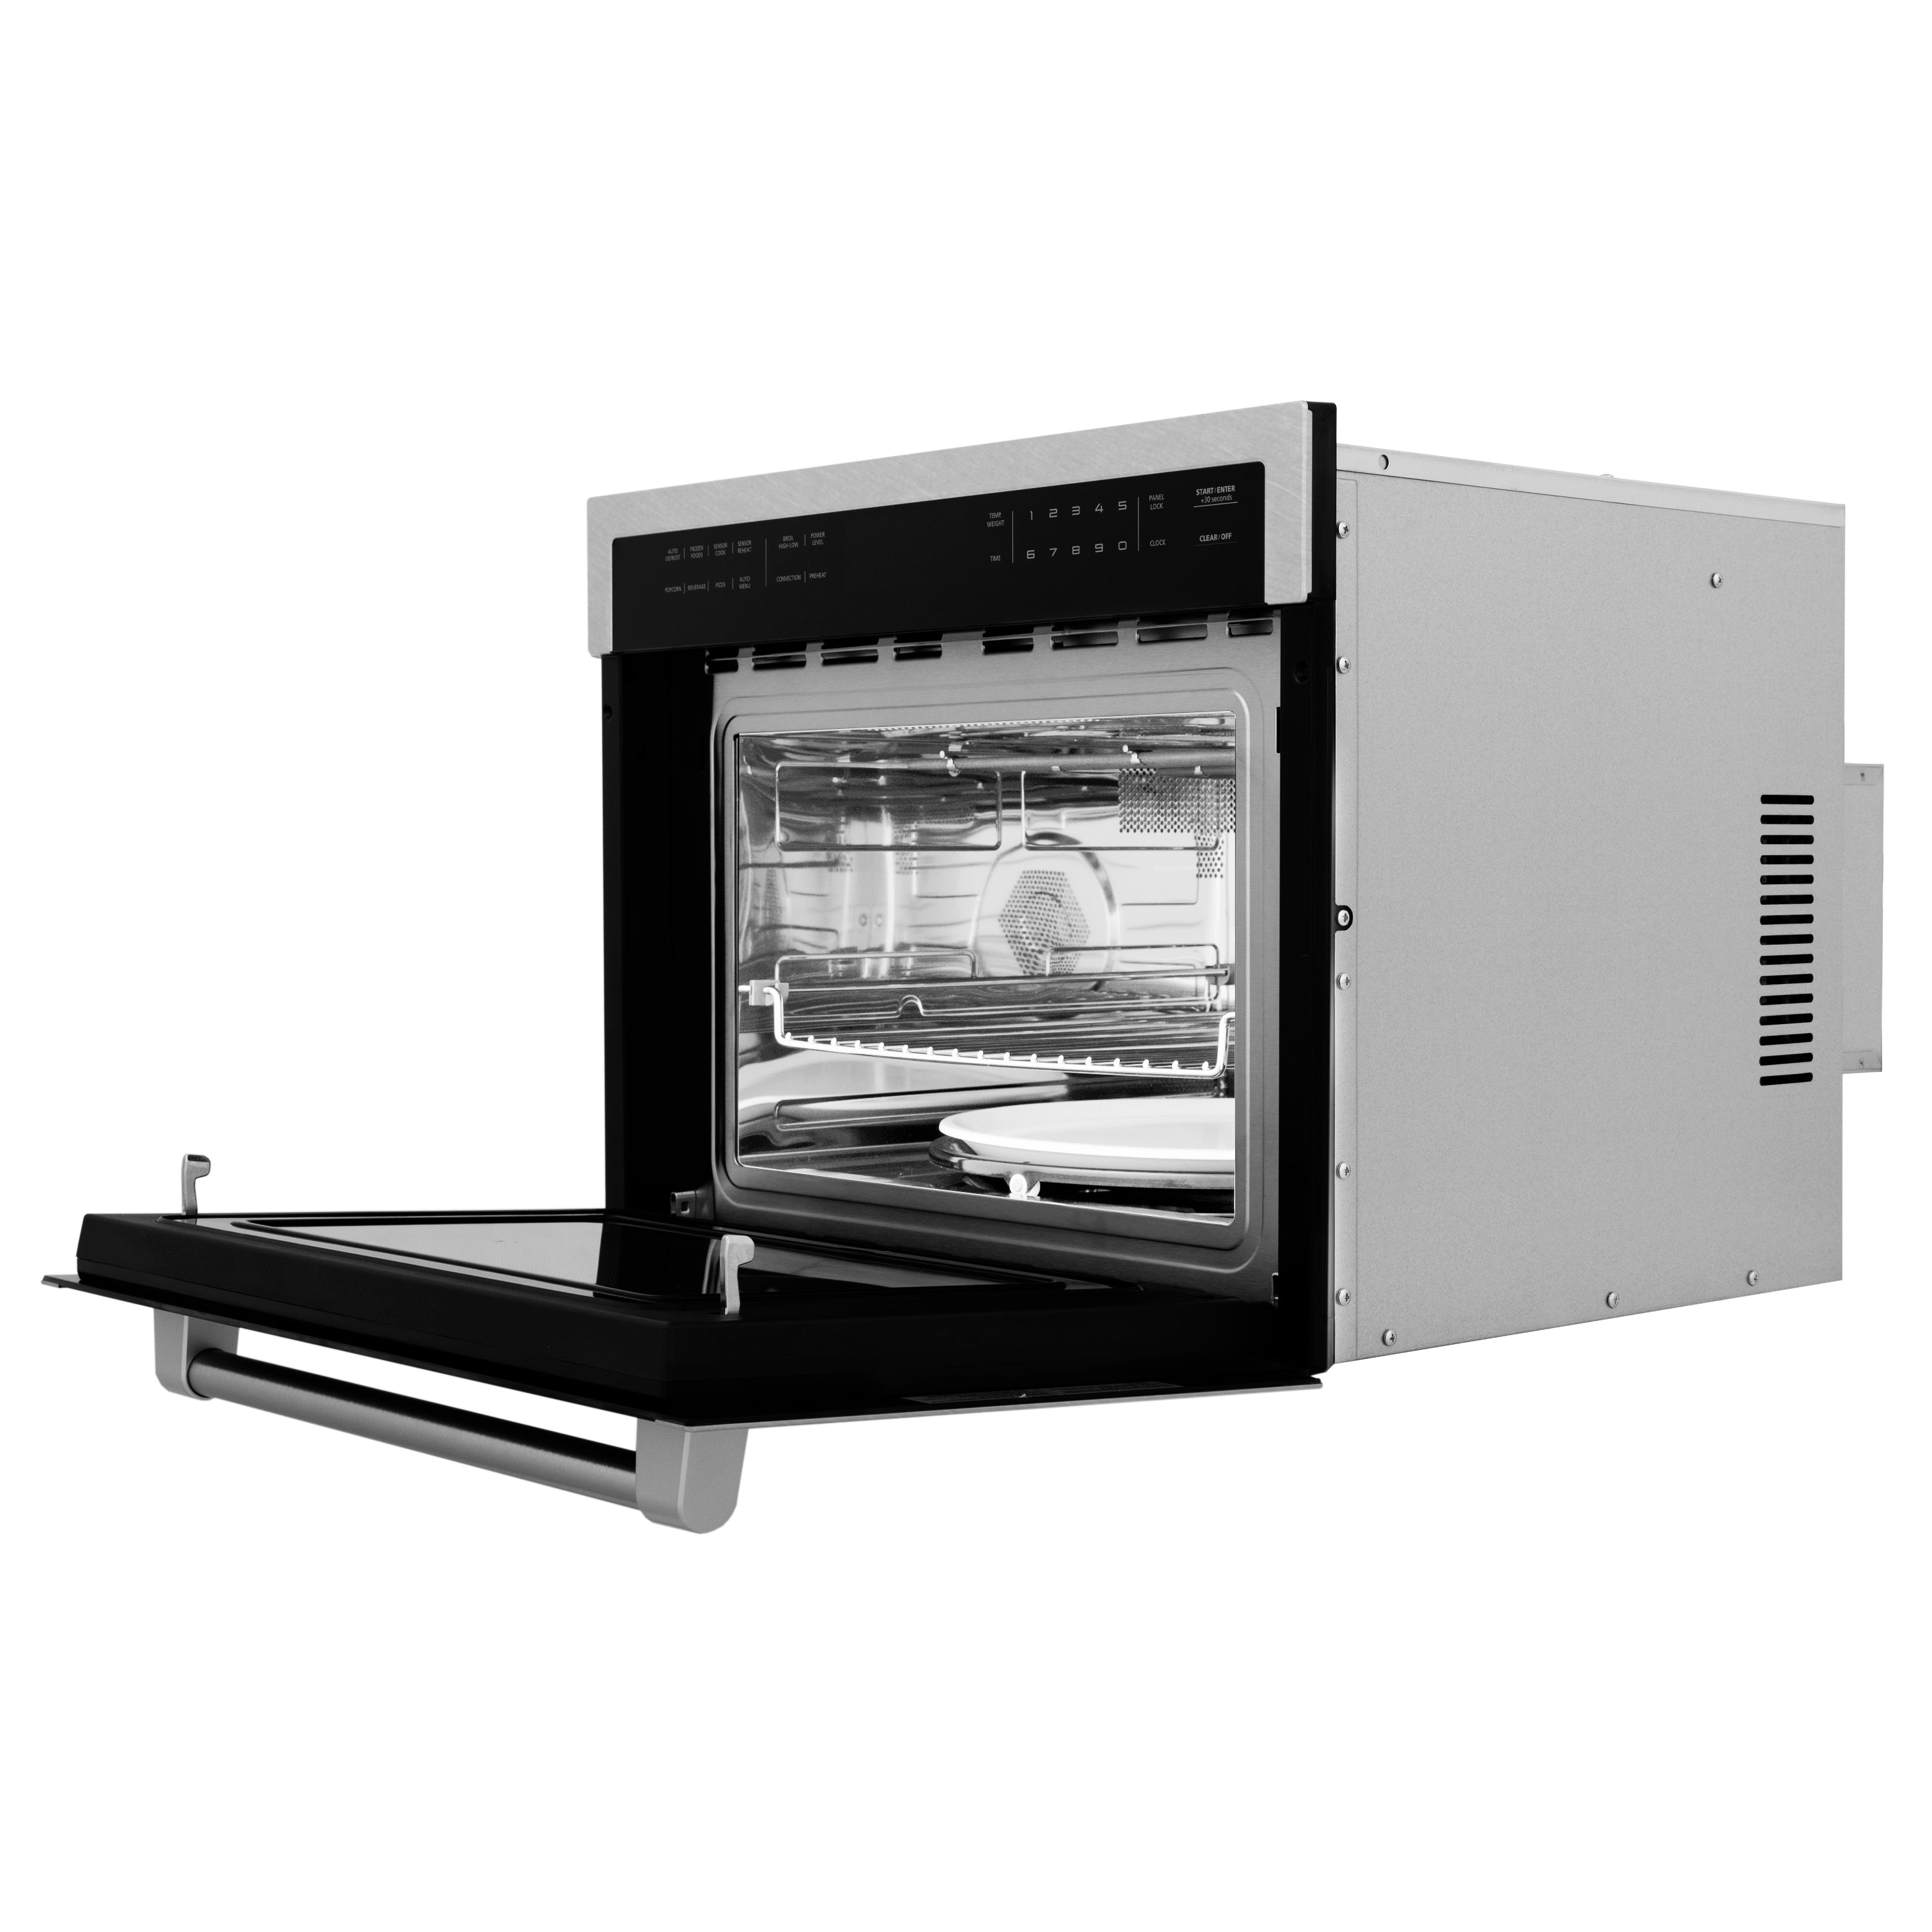 ZLINE 24 in. Built-in Convection Microwave Oven in Fingerprint Resistant DuraSnow Stainless Steel (MWO-24-SS) Side View Door Open